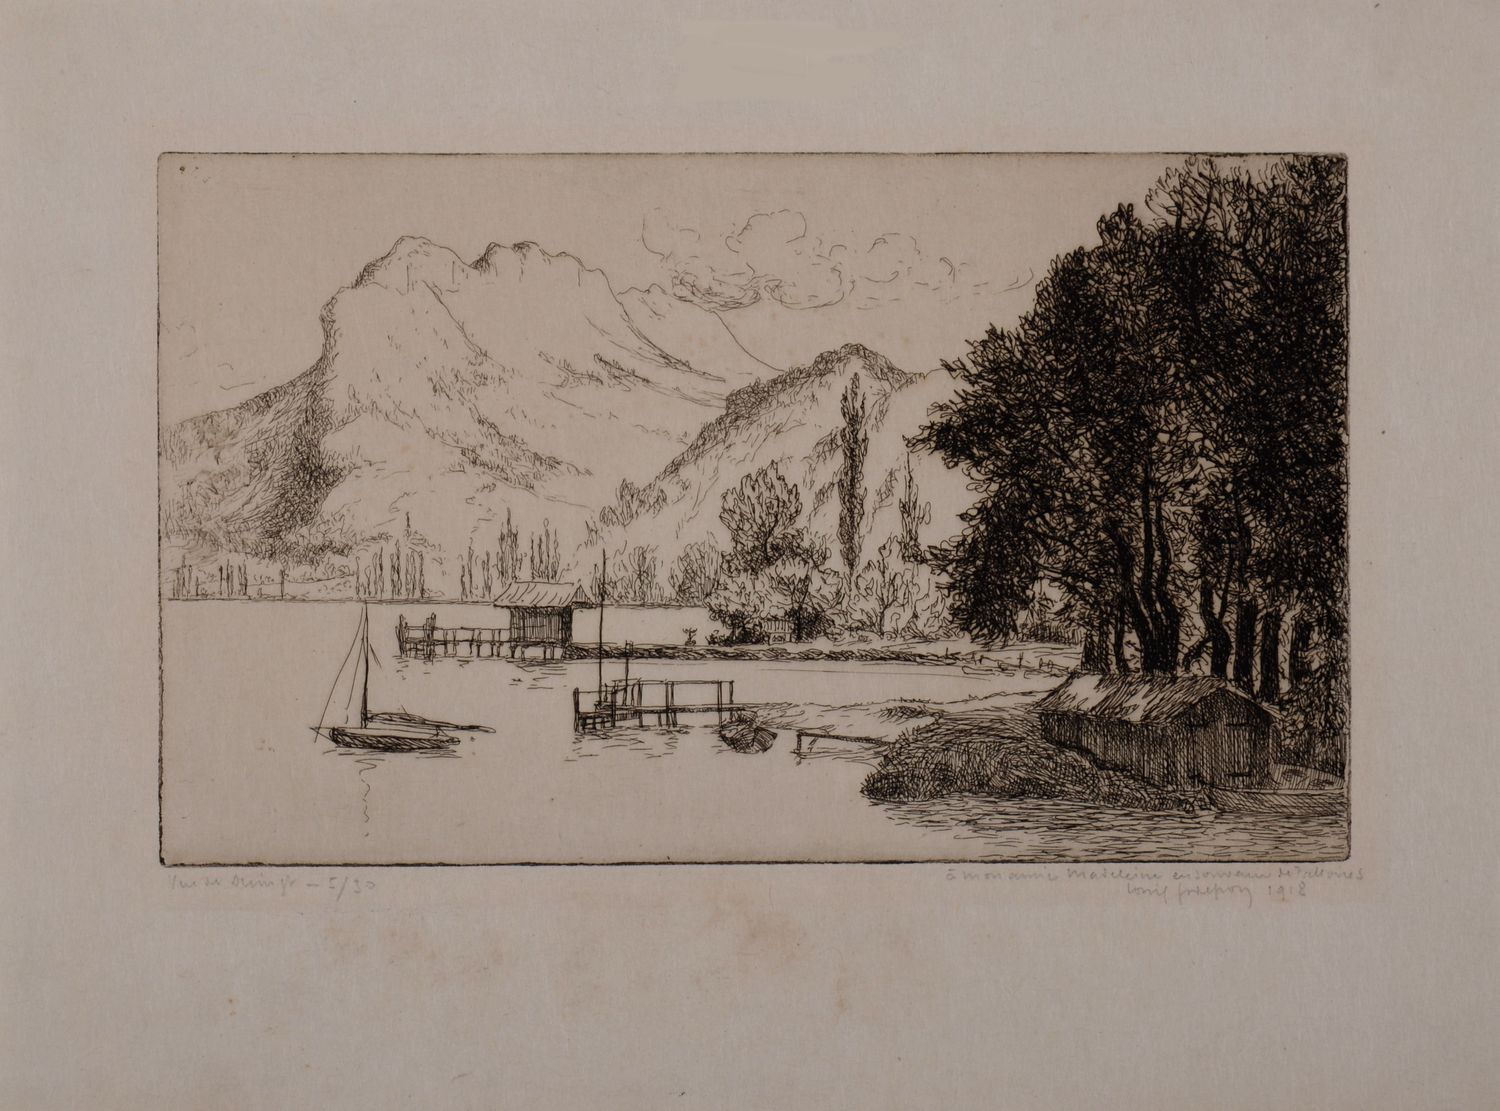 Louis GODEFROY 路易斯-戈德弗伊 (1885 - 1934)

杜英特的景色，1918年

日本纸上的原始蚀刻画，用褐色墨水印刷

左下角有编号5&hellip;